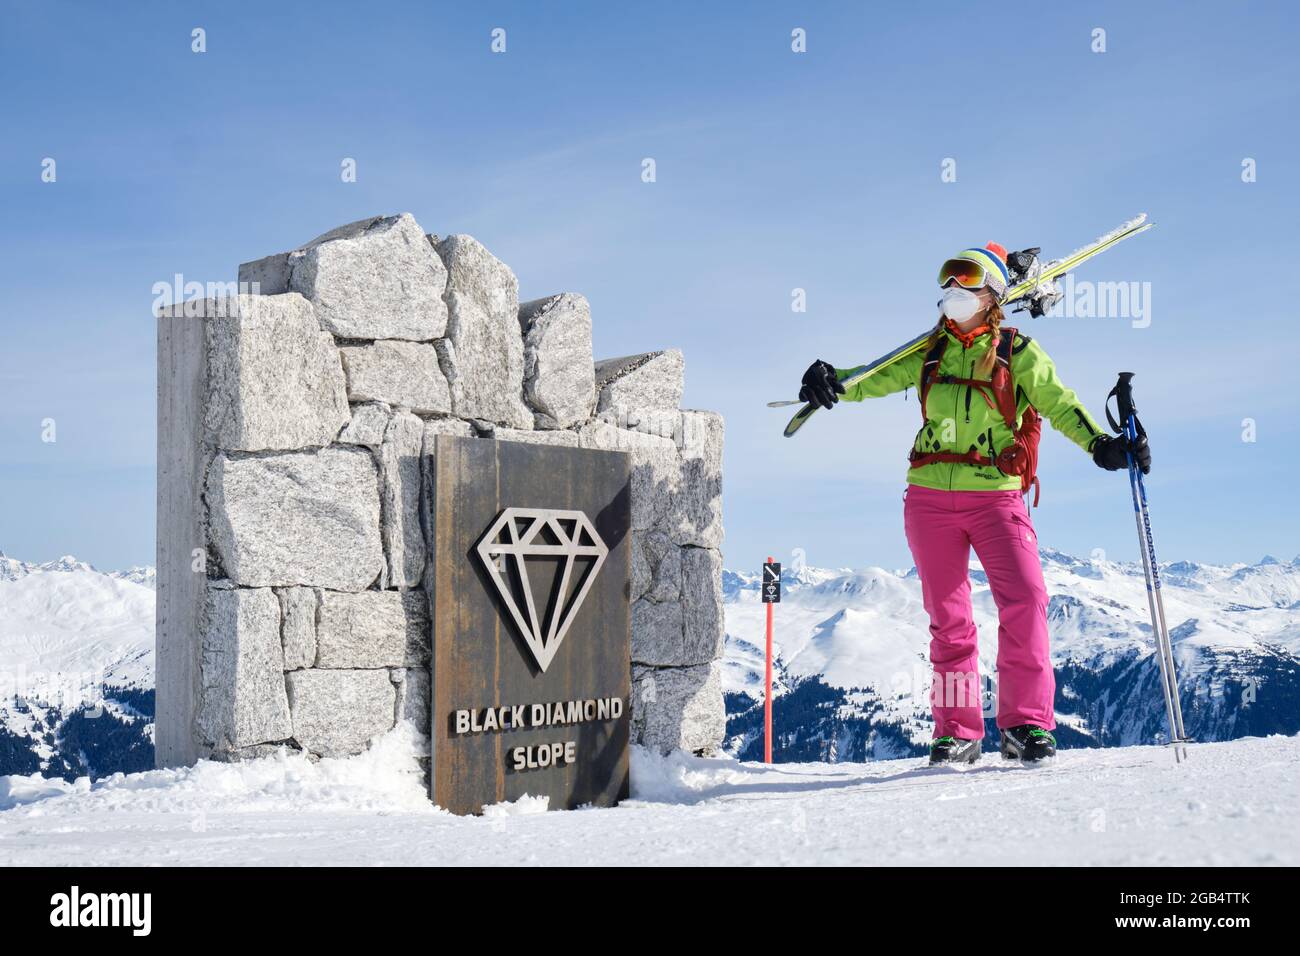 Black diamond ski slope hi-res stock photography and images - Alamy